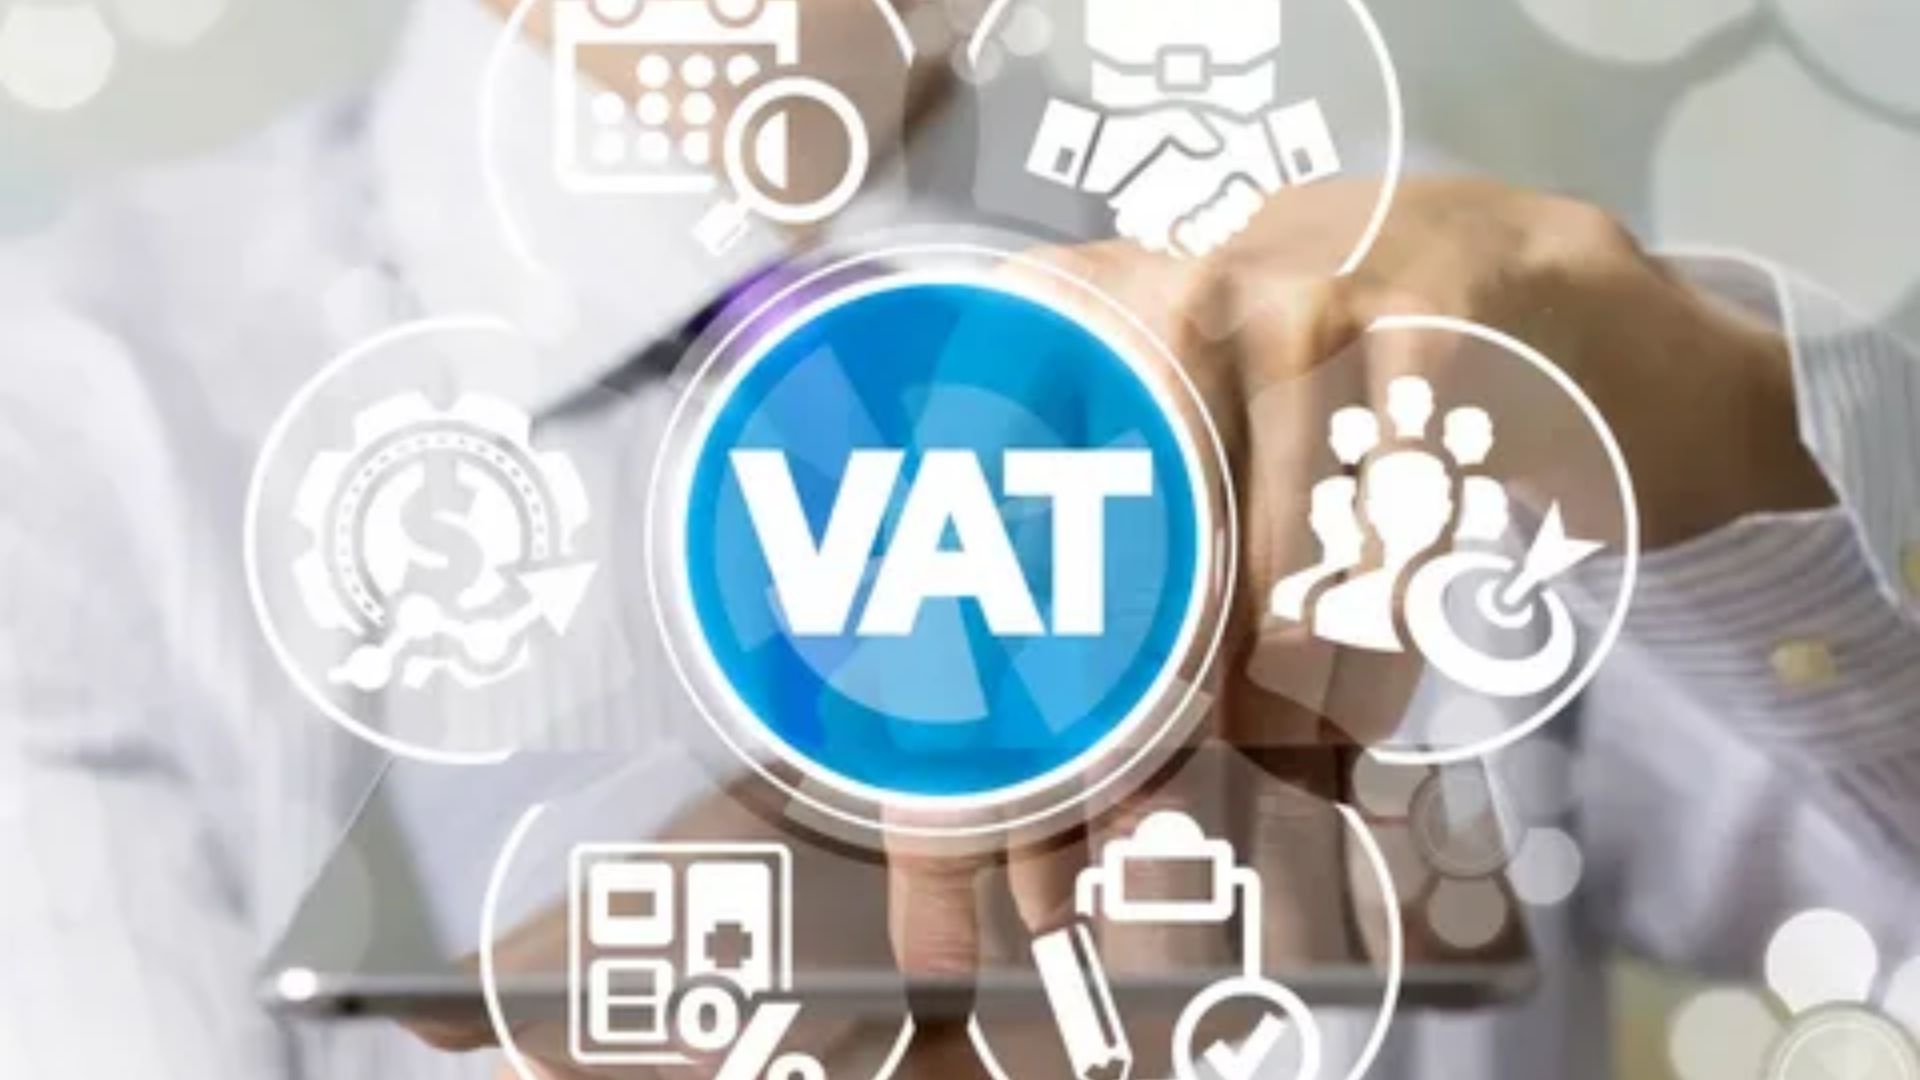 VAT Rеgistration Madе Simplе